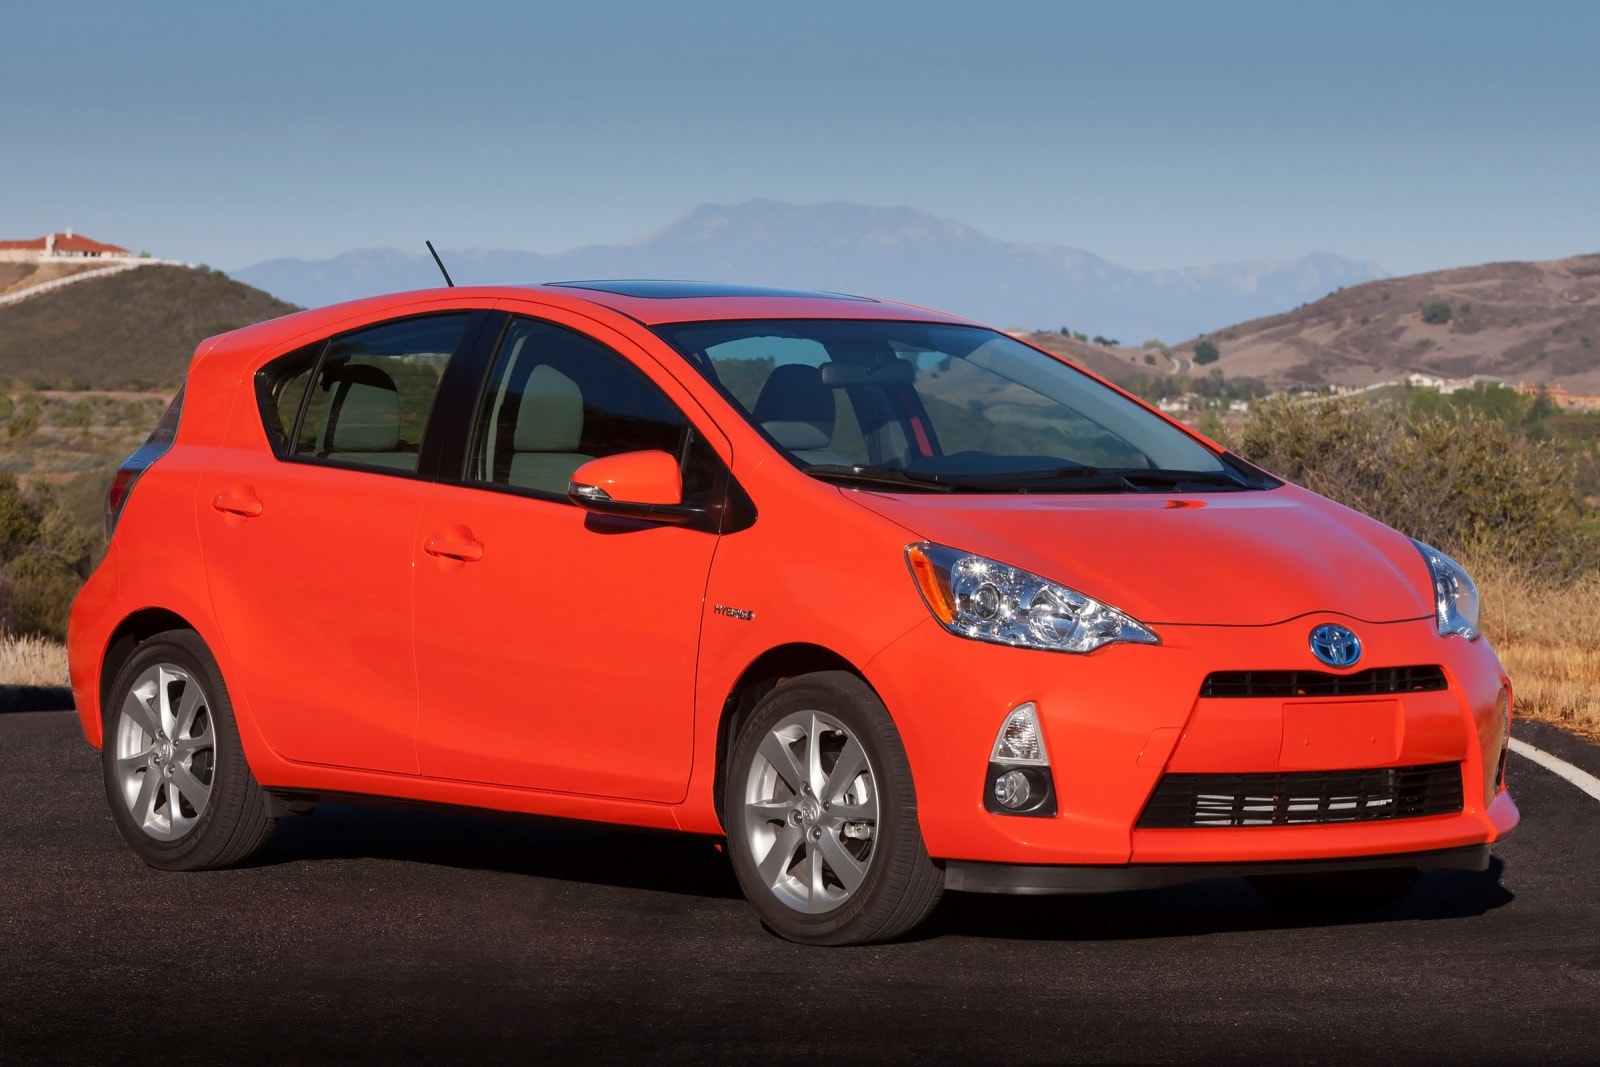 2013 Toyota Prius c Review & Ratings | Edmunds